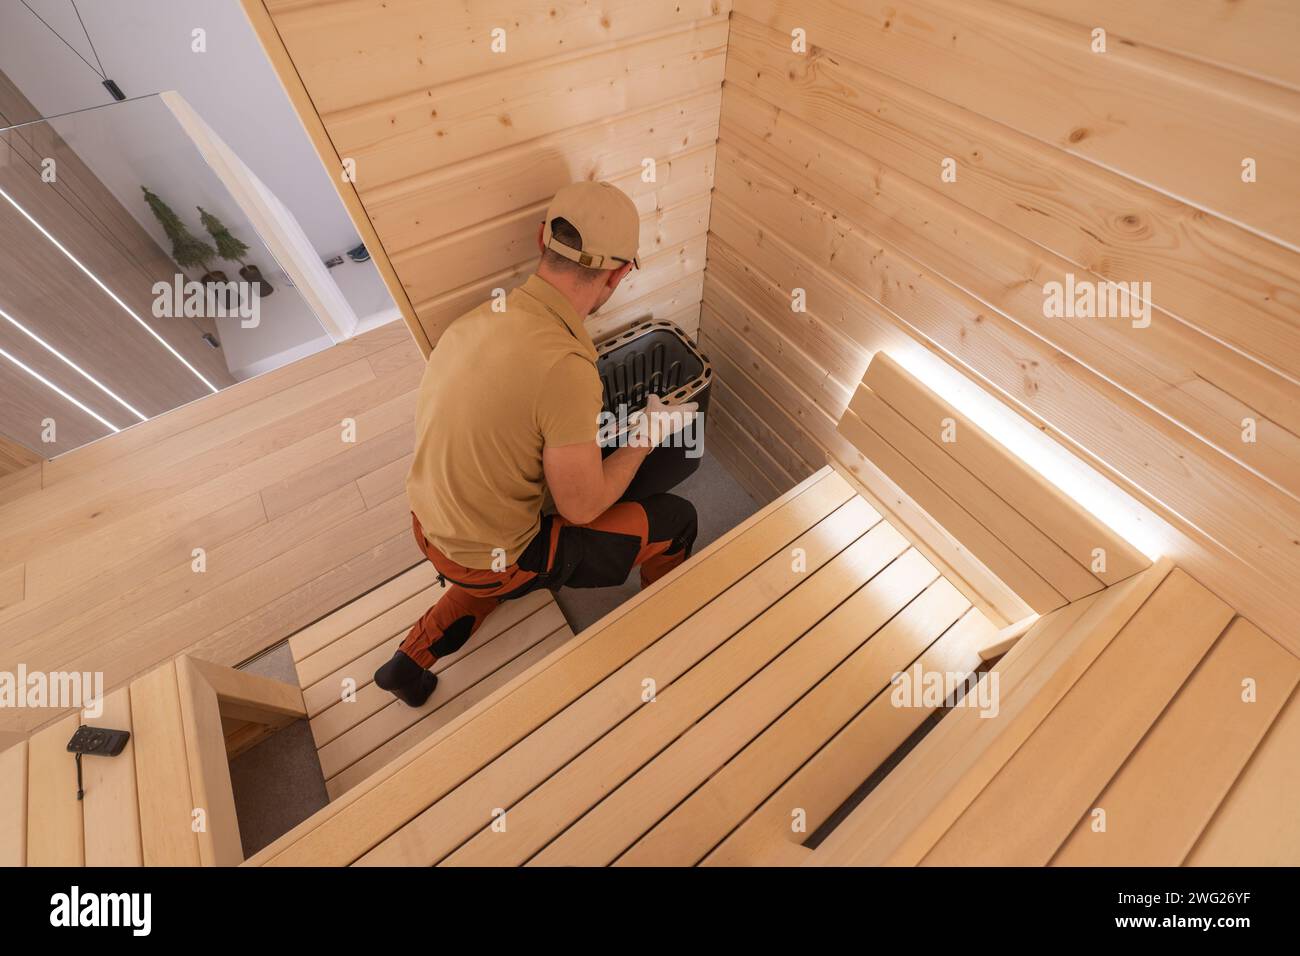 Professional Sauna Builder in His 40s Finishing Residential Finnish Sauna Stock Photo